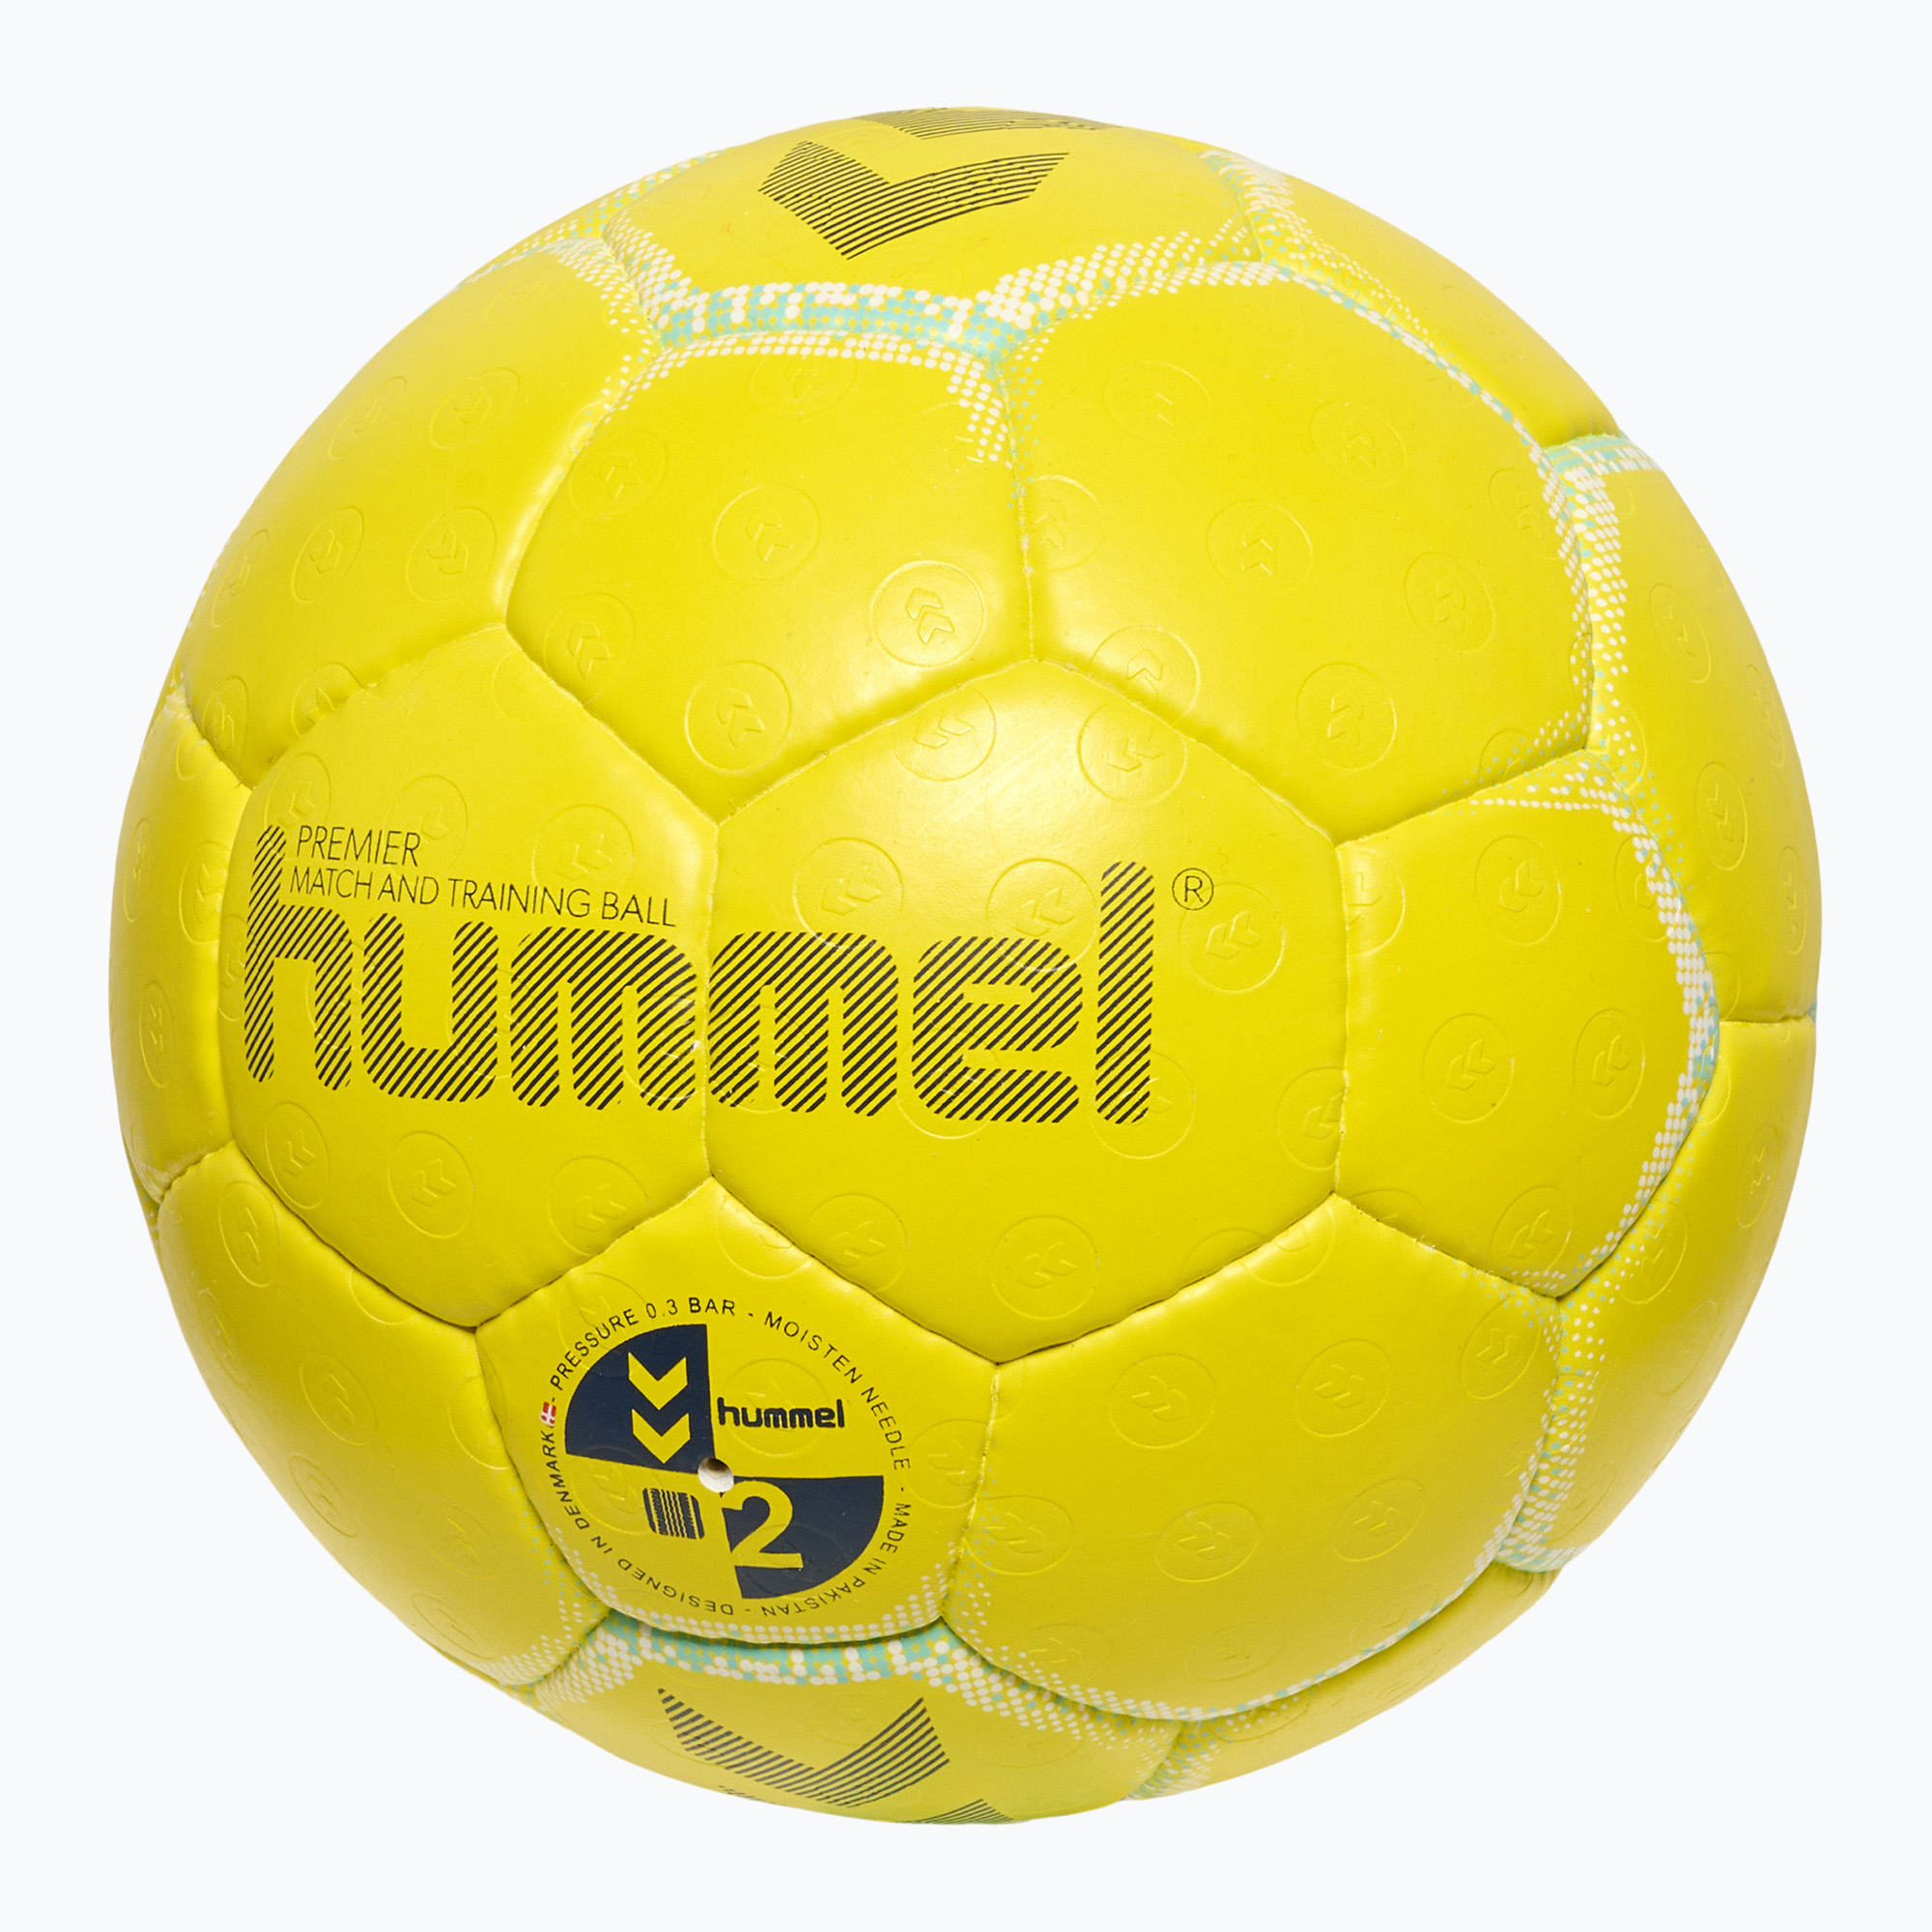 Hummel Premier HB handball yellow/white/blue size 1